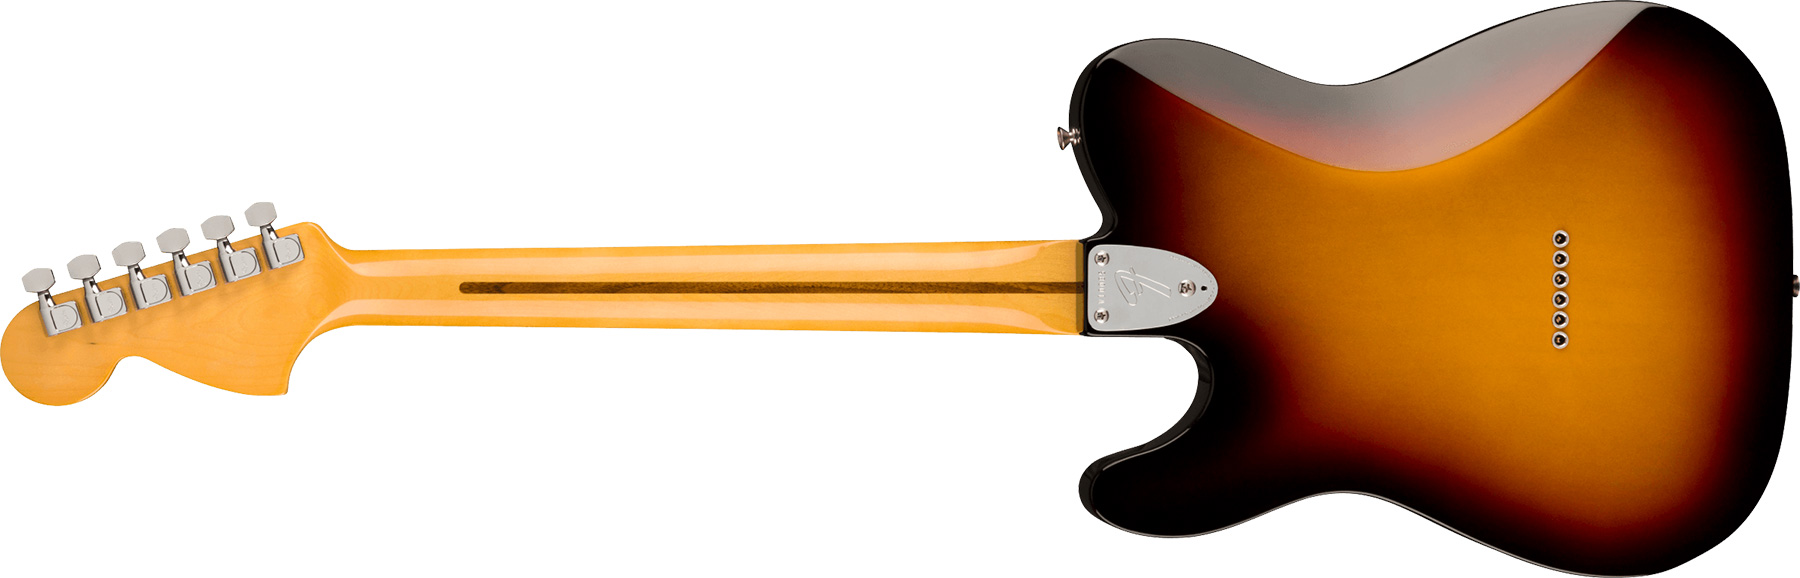 Fender Tele Deluxe 1975 American Vintage Ii Usa 2h Ht Mn - 3-color Sunburst - Televorm elektrische gitaar - Variation 1